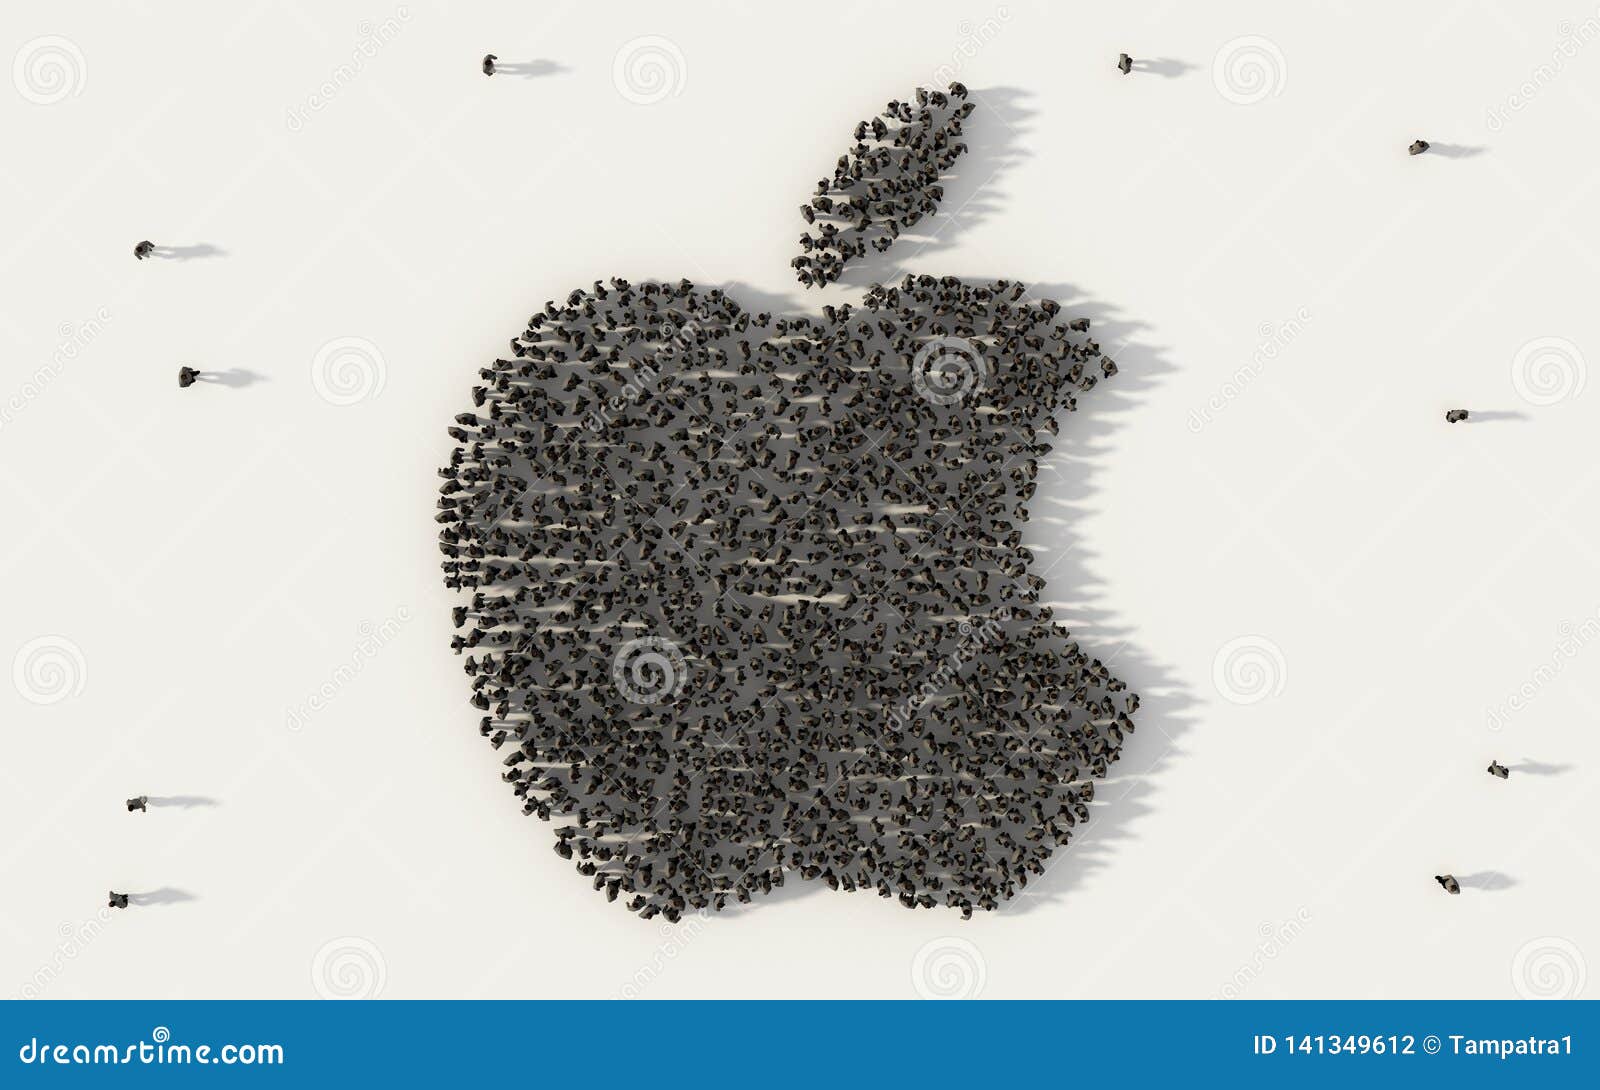 Apple 3D Logo (Community)